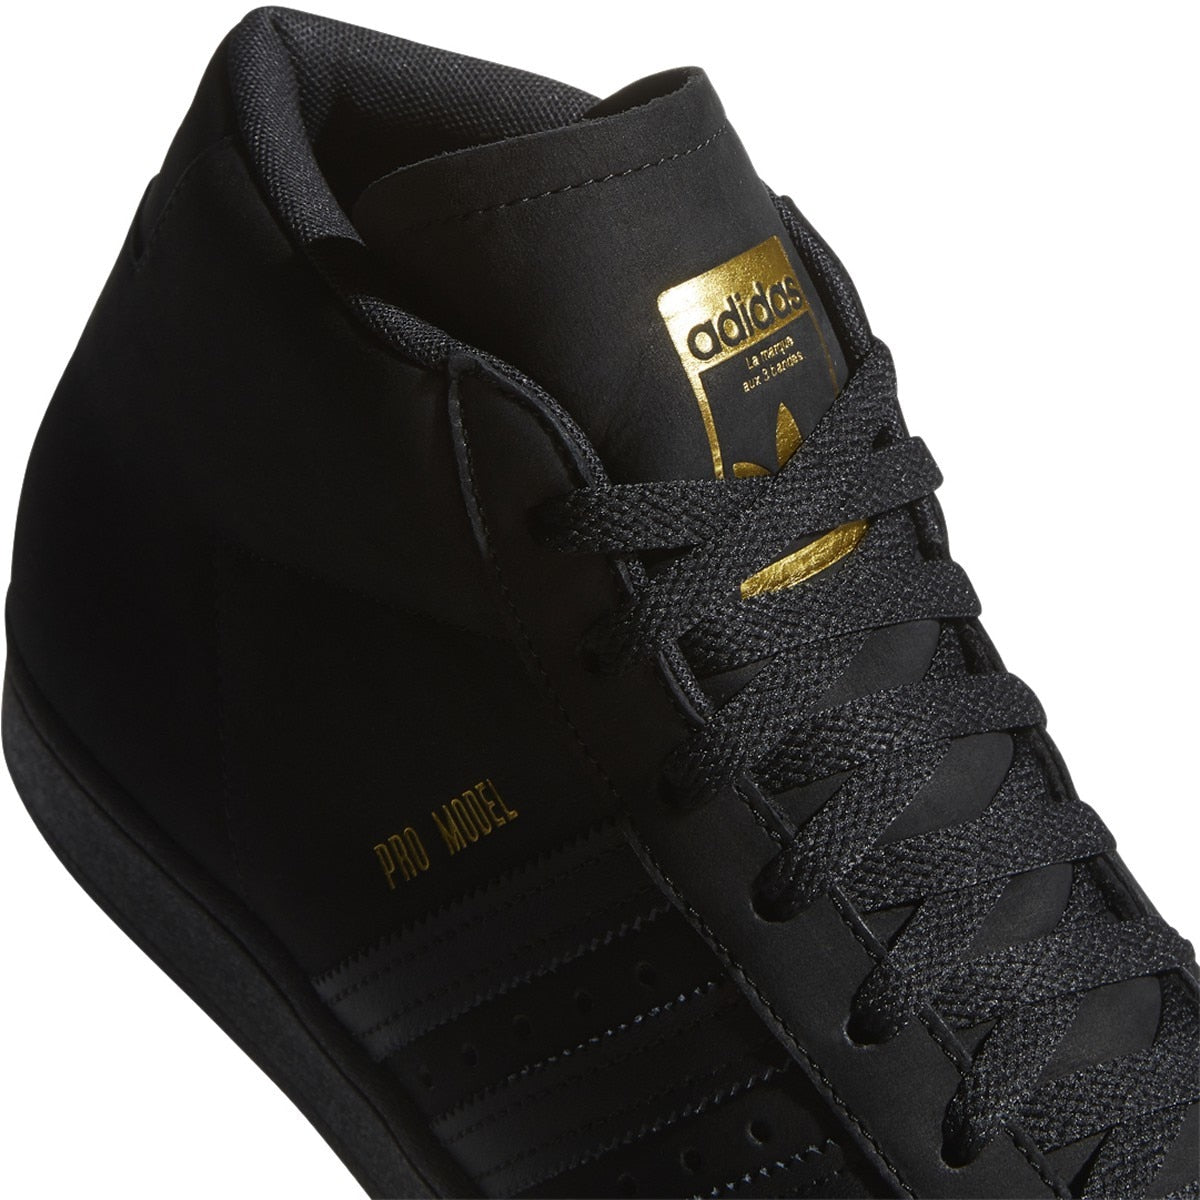 Adidas Pro Model Skate Shoe - Black/Gold/White